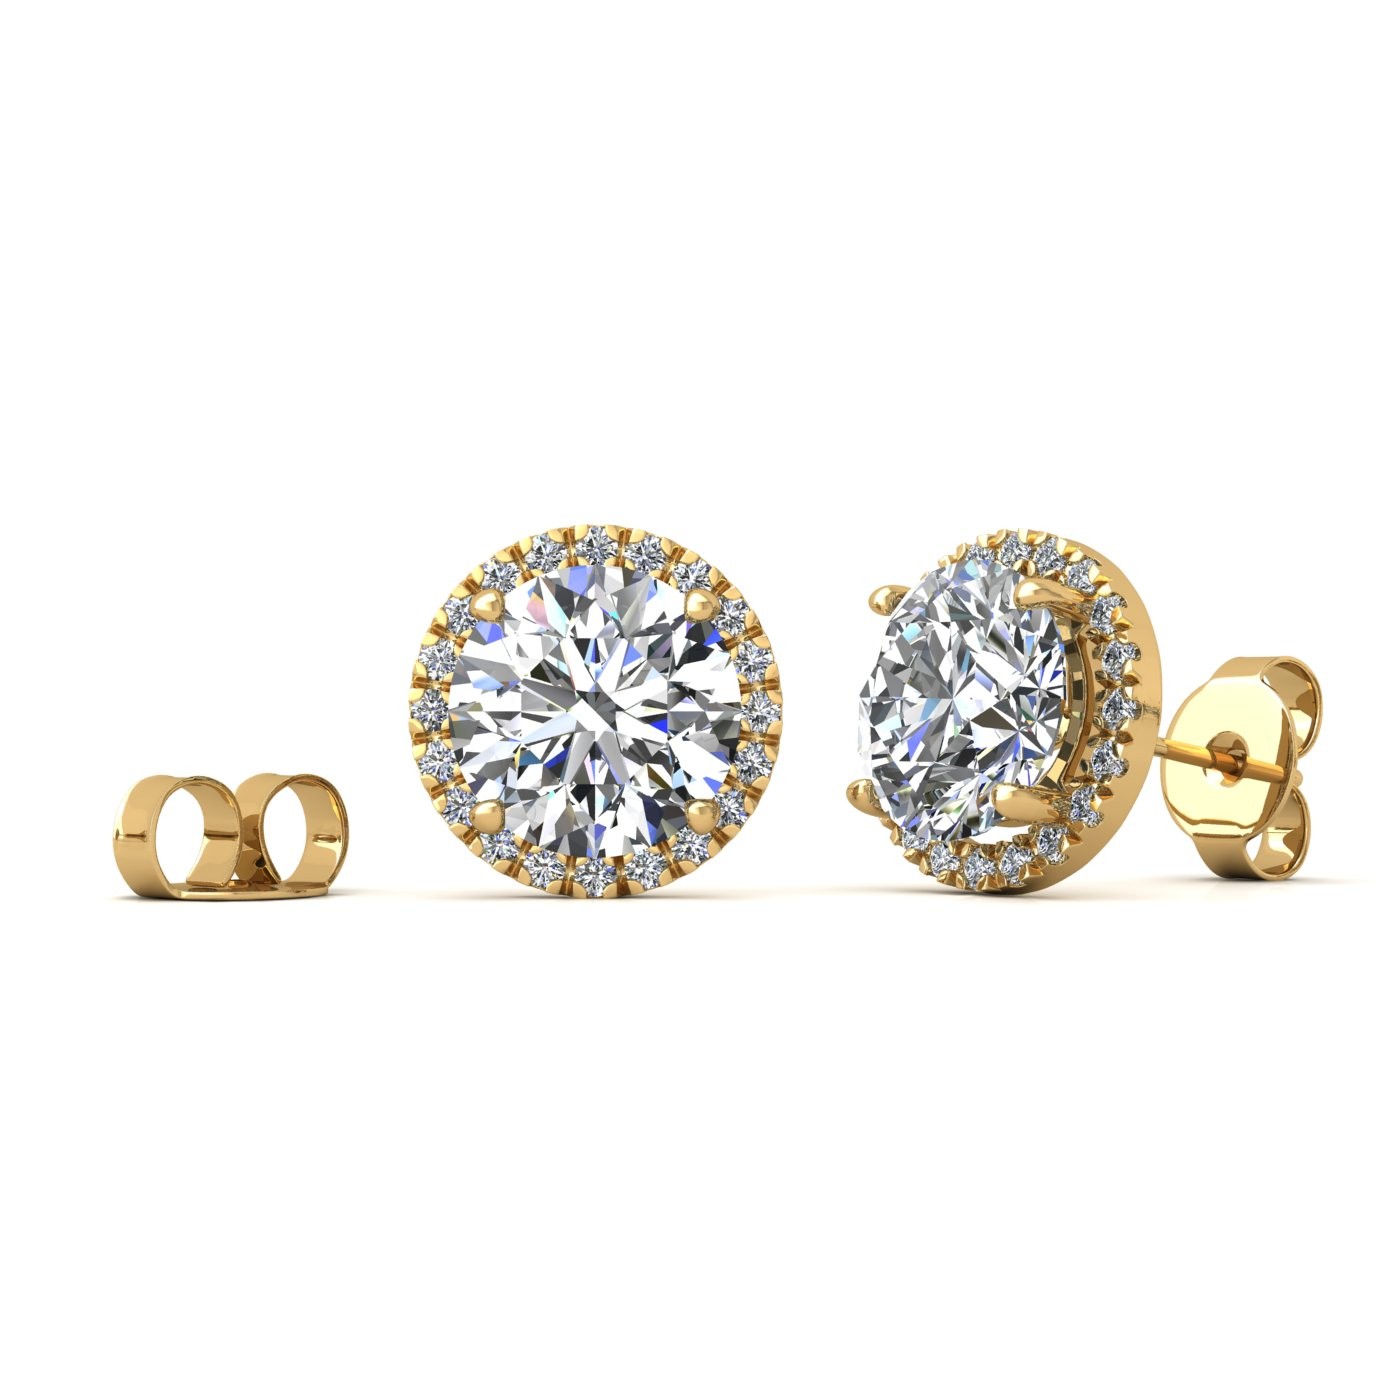 18k rose gold  1 ct each (2,0 tcw) 4 prongs round shape diamond earrings with diamond pavÉ set halo Photos & images